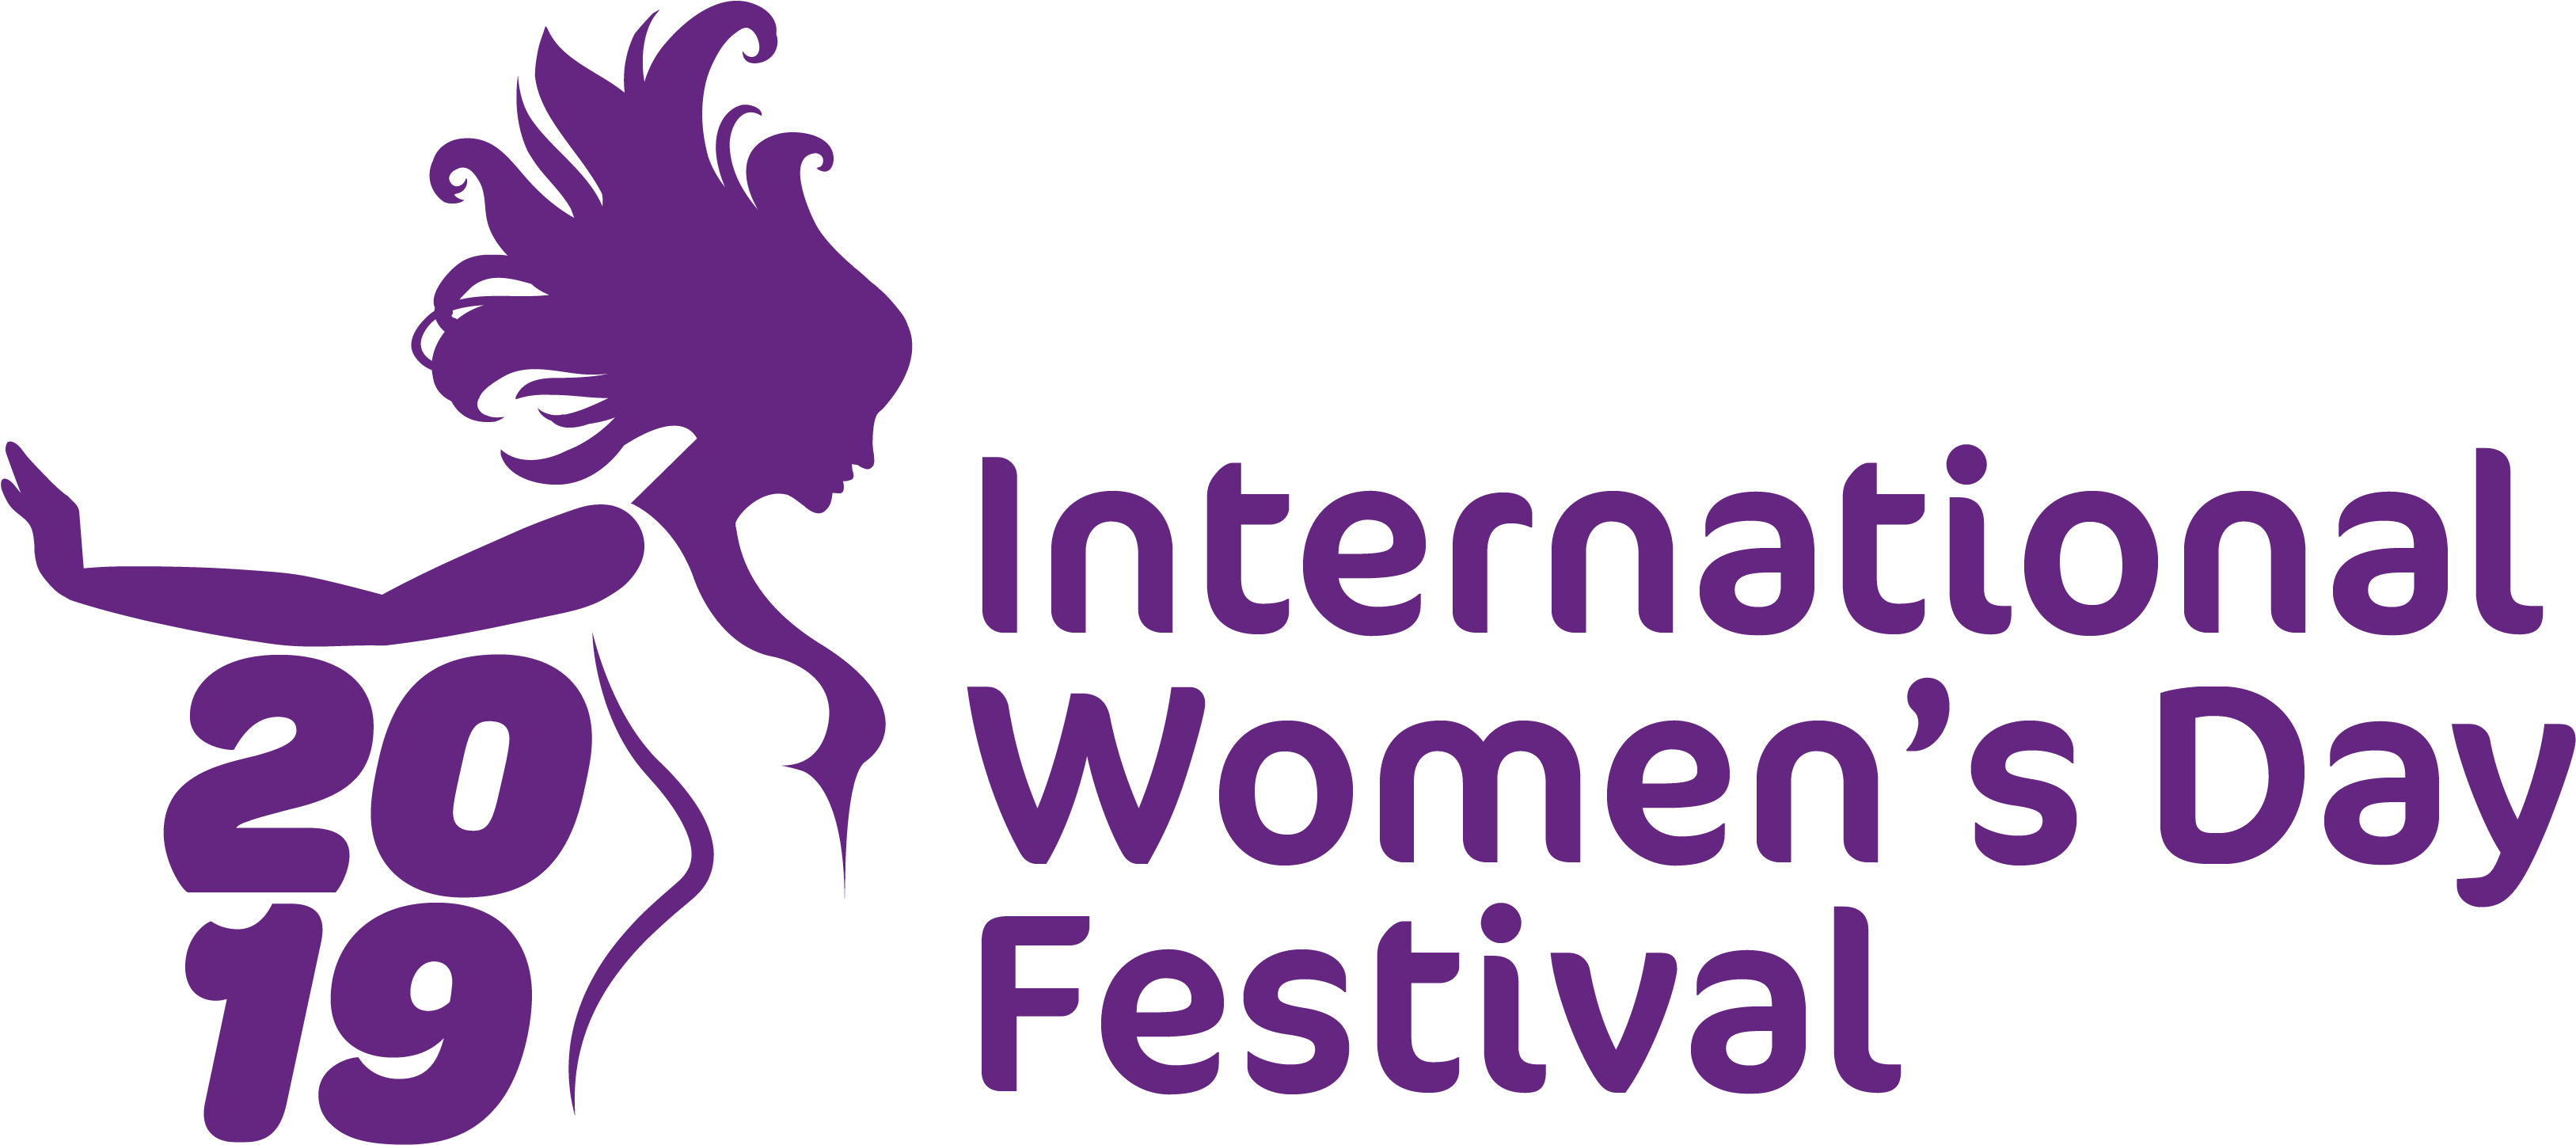 International Women's Day 2019, Hd Png Download